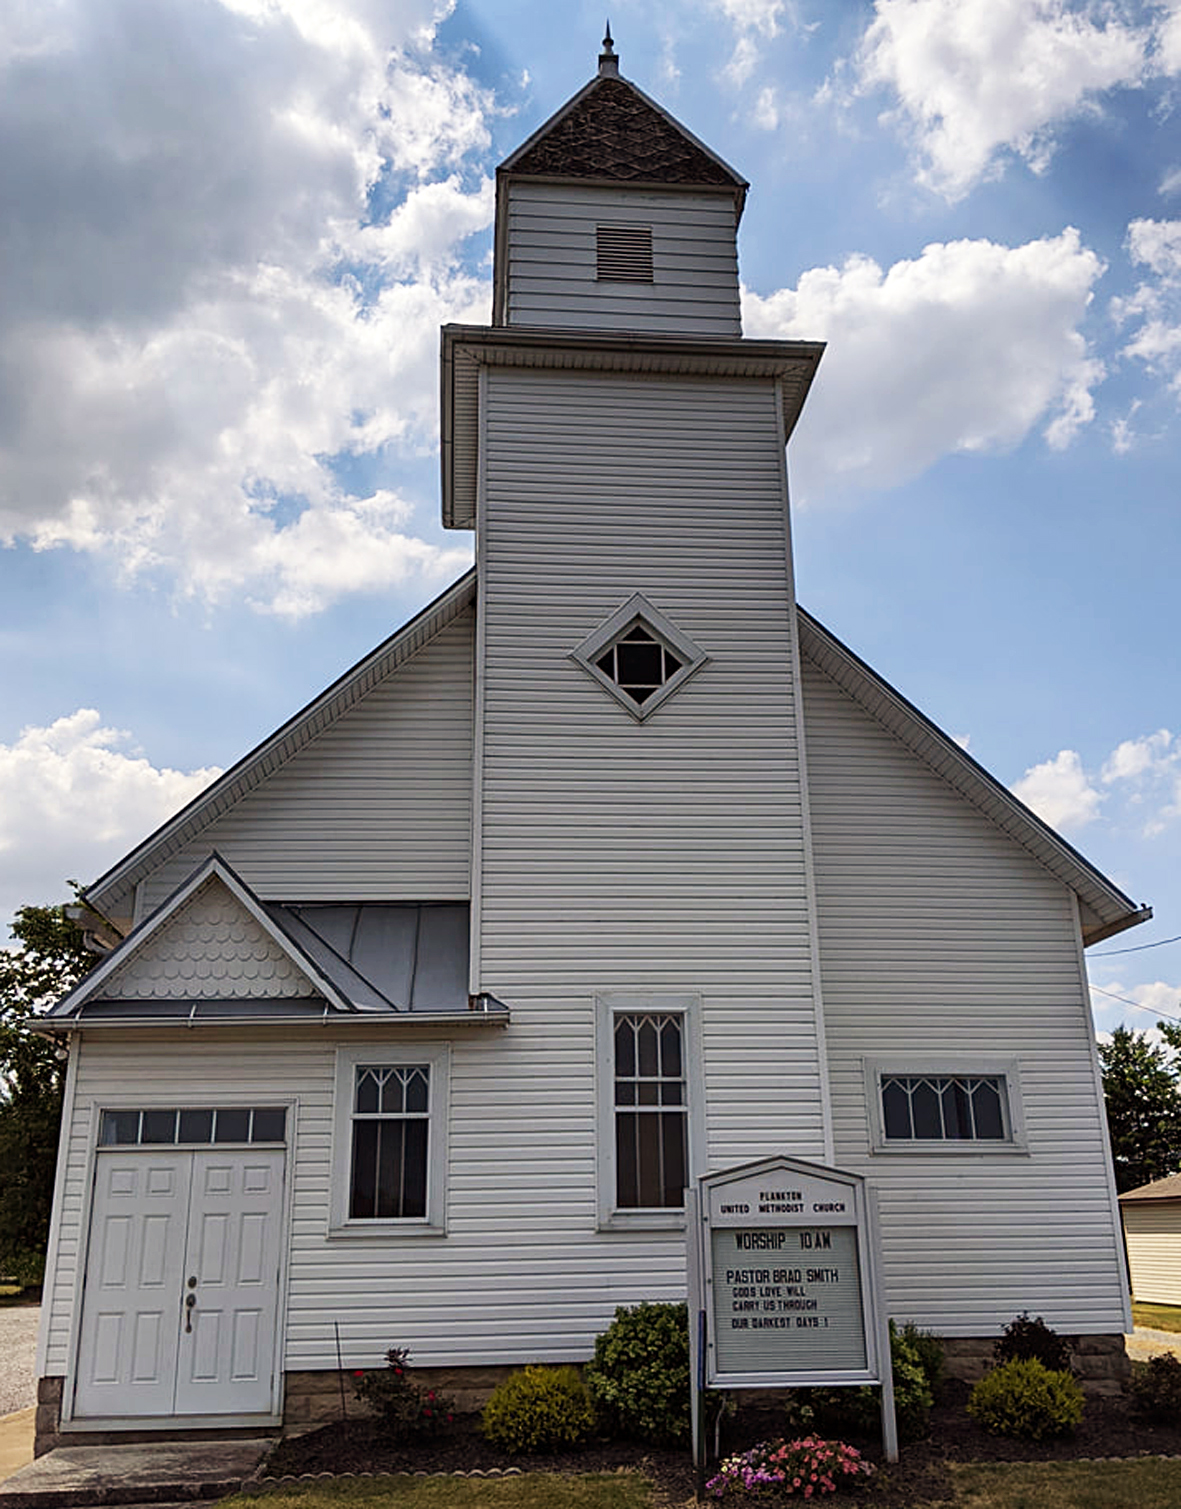 The Plankton United Methodist Church in Plankton, Ohio